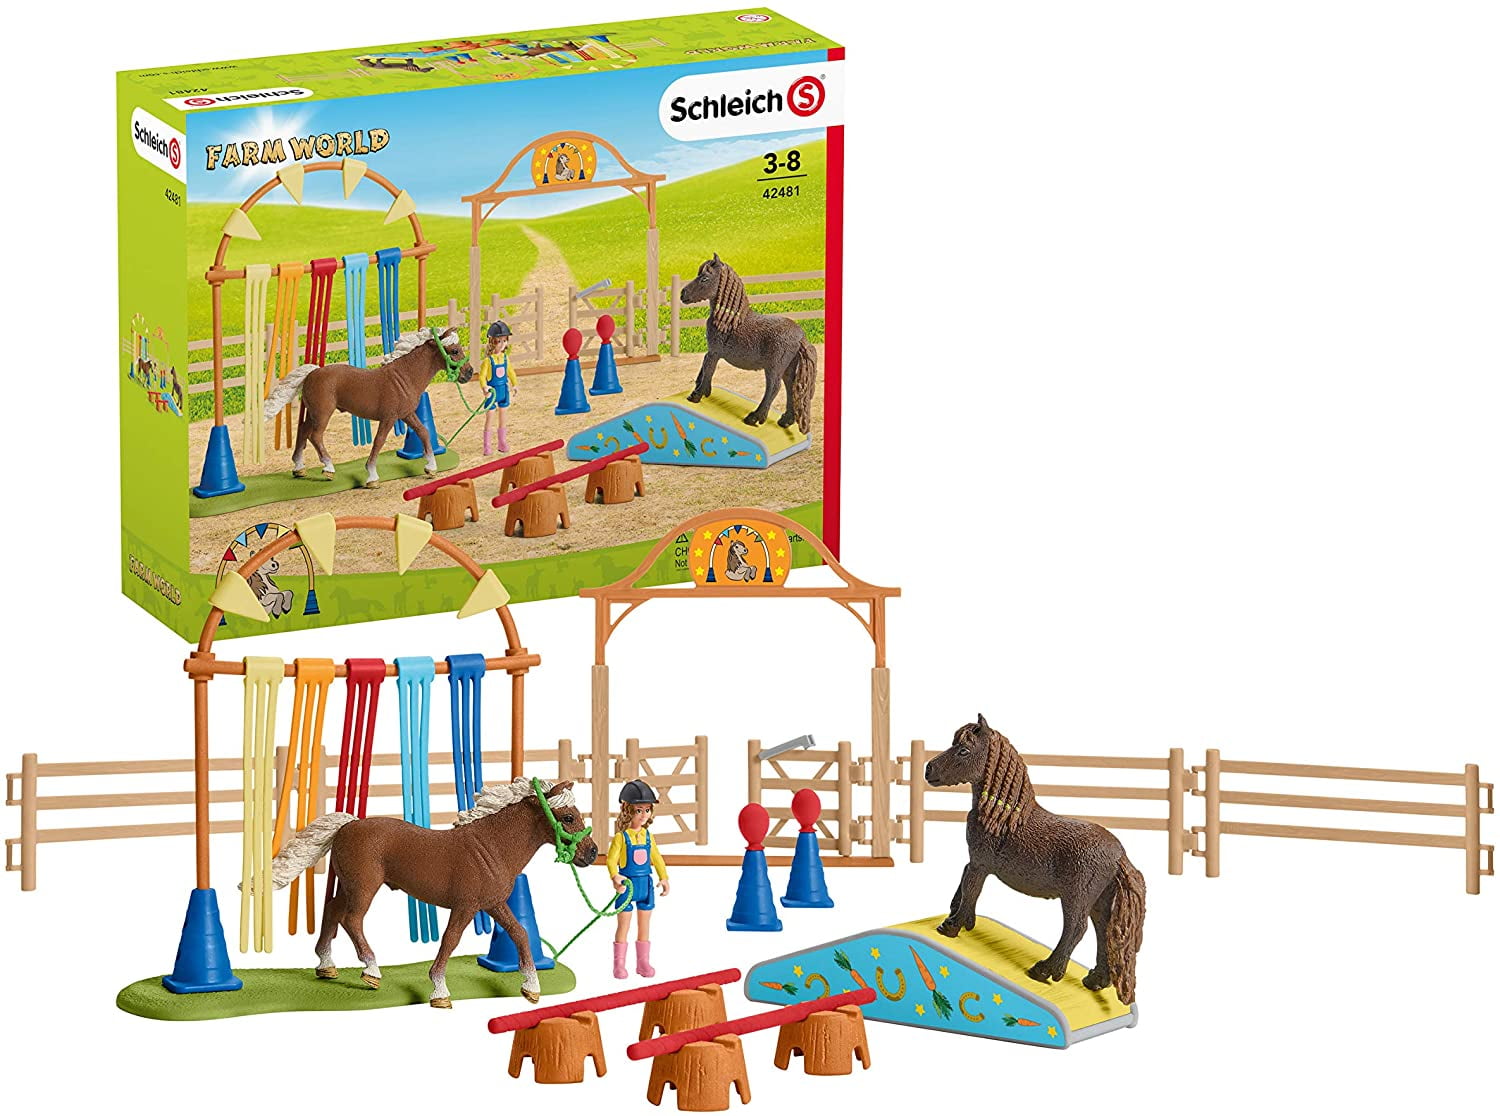 Bro Farm World Pony Agility Training 41-piece Horse Playset for Kids Ages 3-8